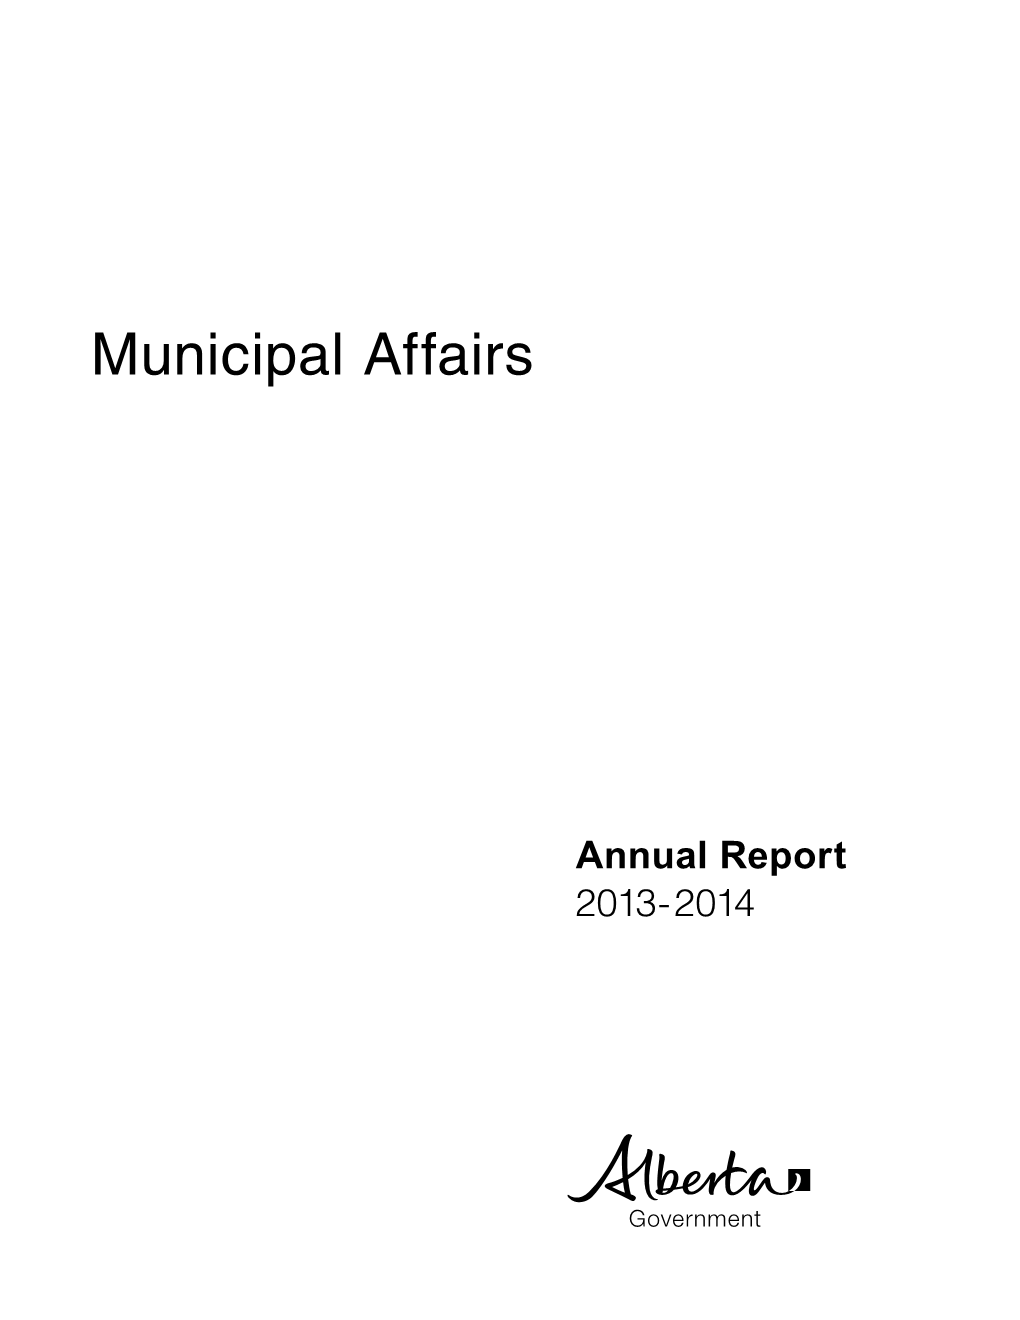 Annual Report 2013 Municipal Affairs